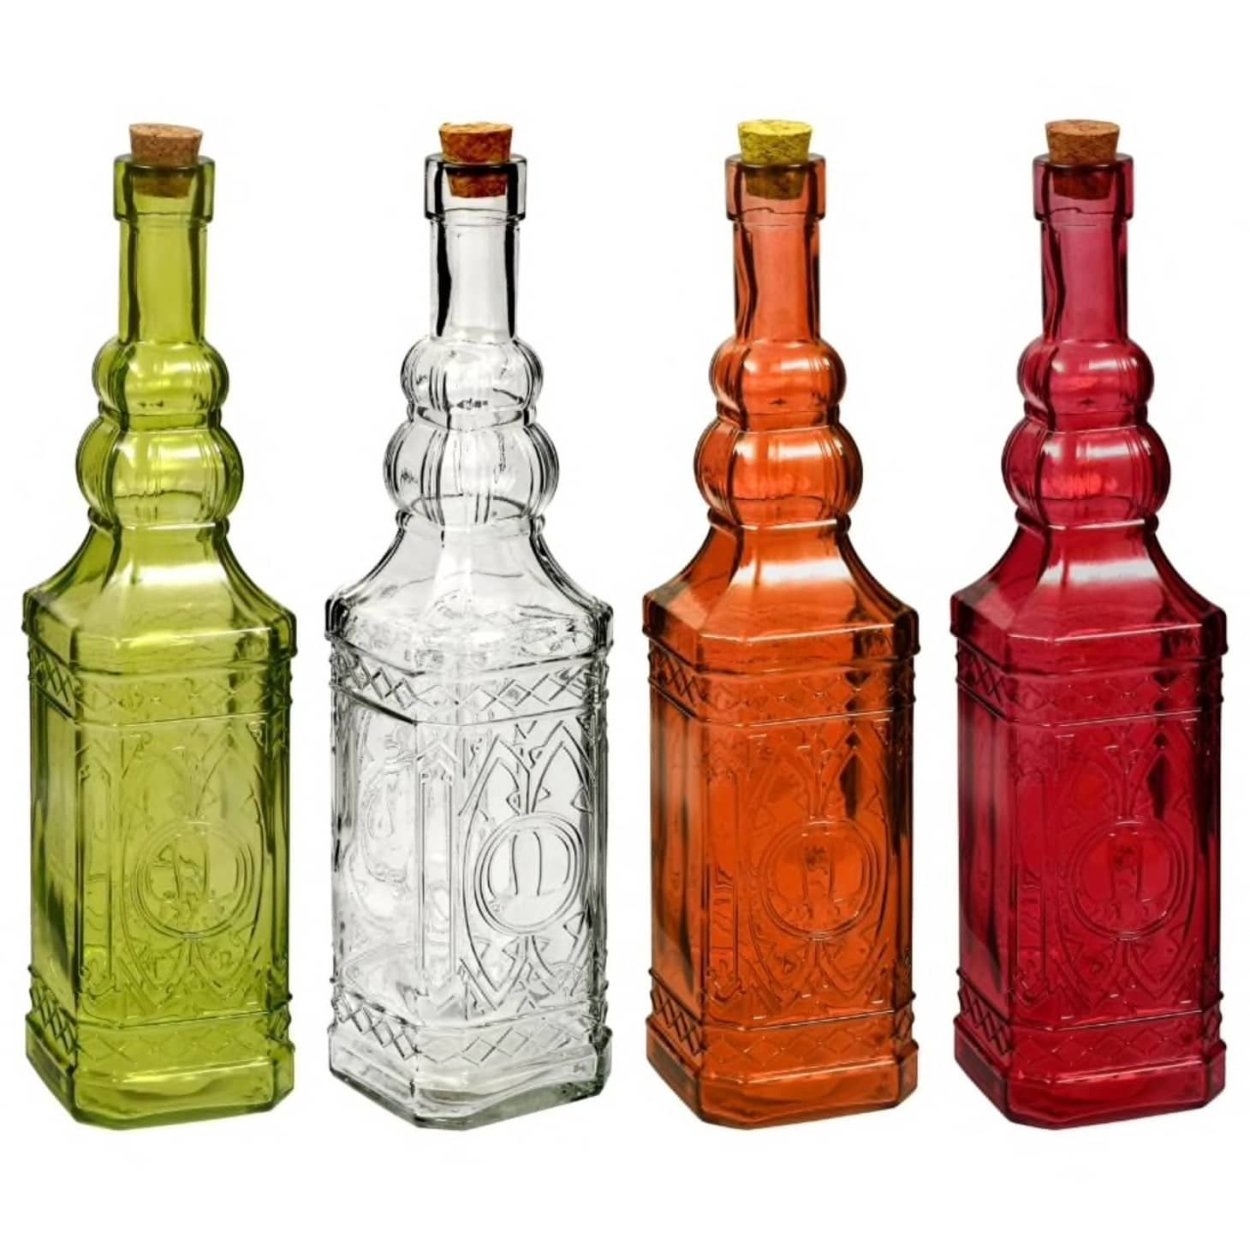 Цветные бутылочки. Разноцветные бутылки. Оригинальные бутылки. Бутылки необычной формы. Винтажная бутылка.